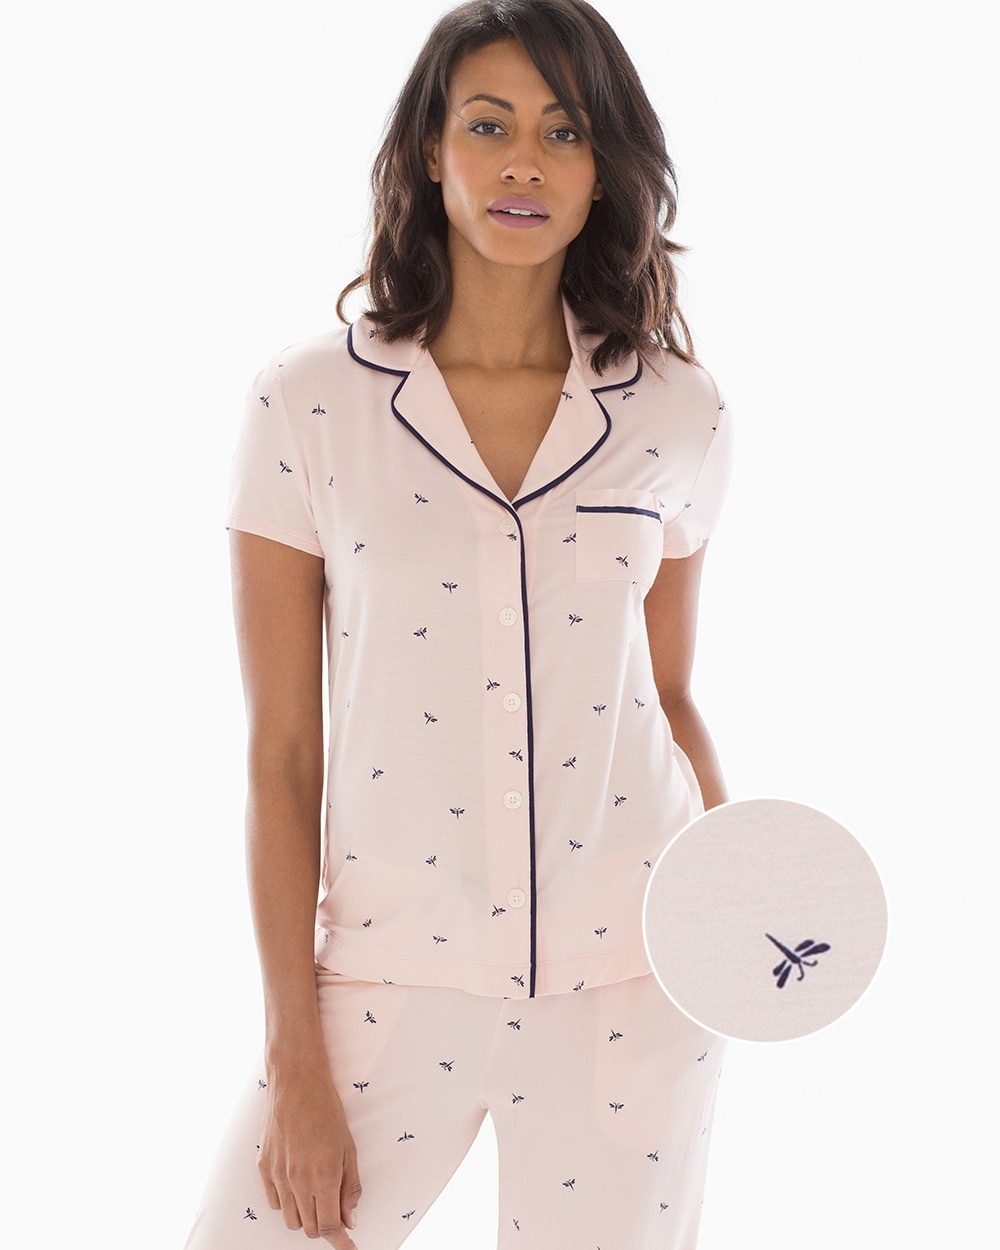 Cool Nights Short Sleeve Grosgrain Trim Notch Collar Pajama Top Dragonfly Peach Blossom